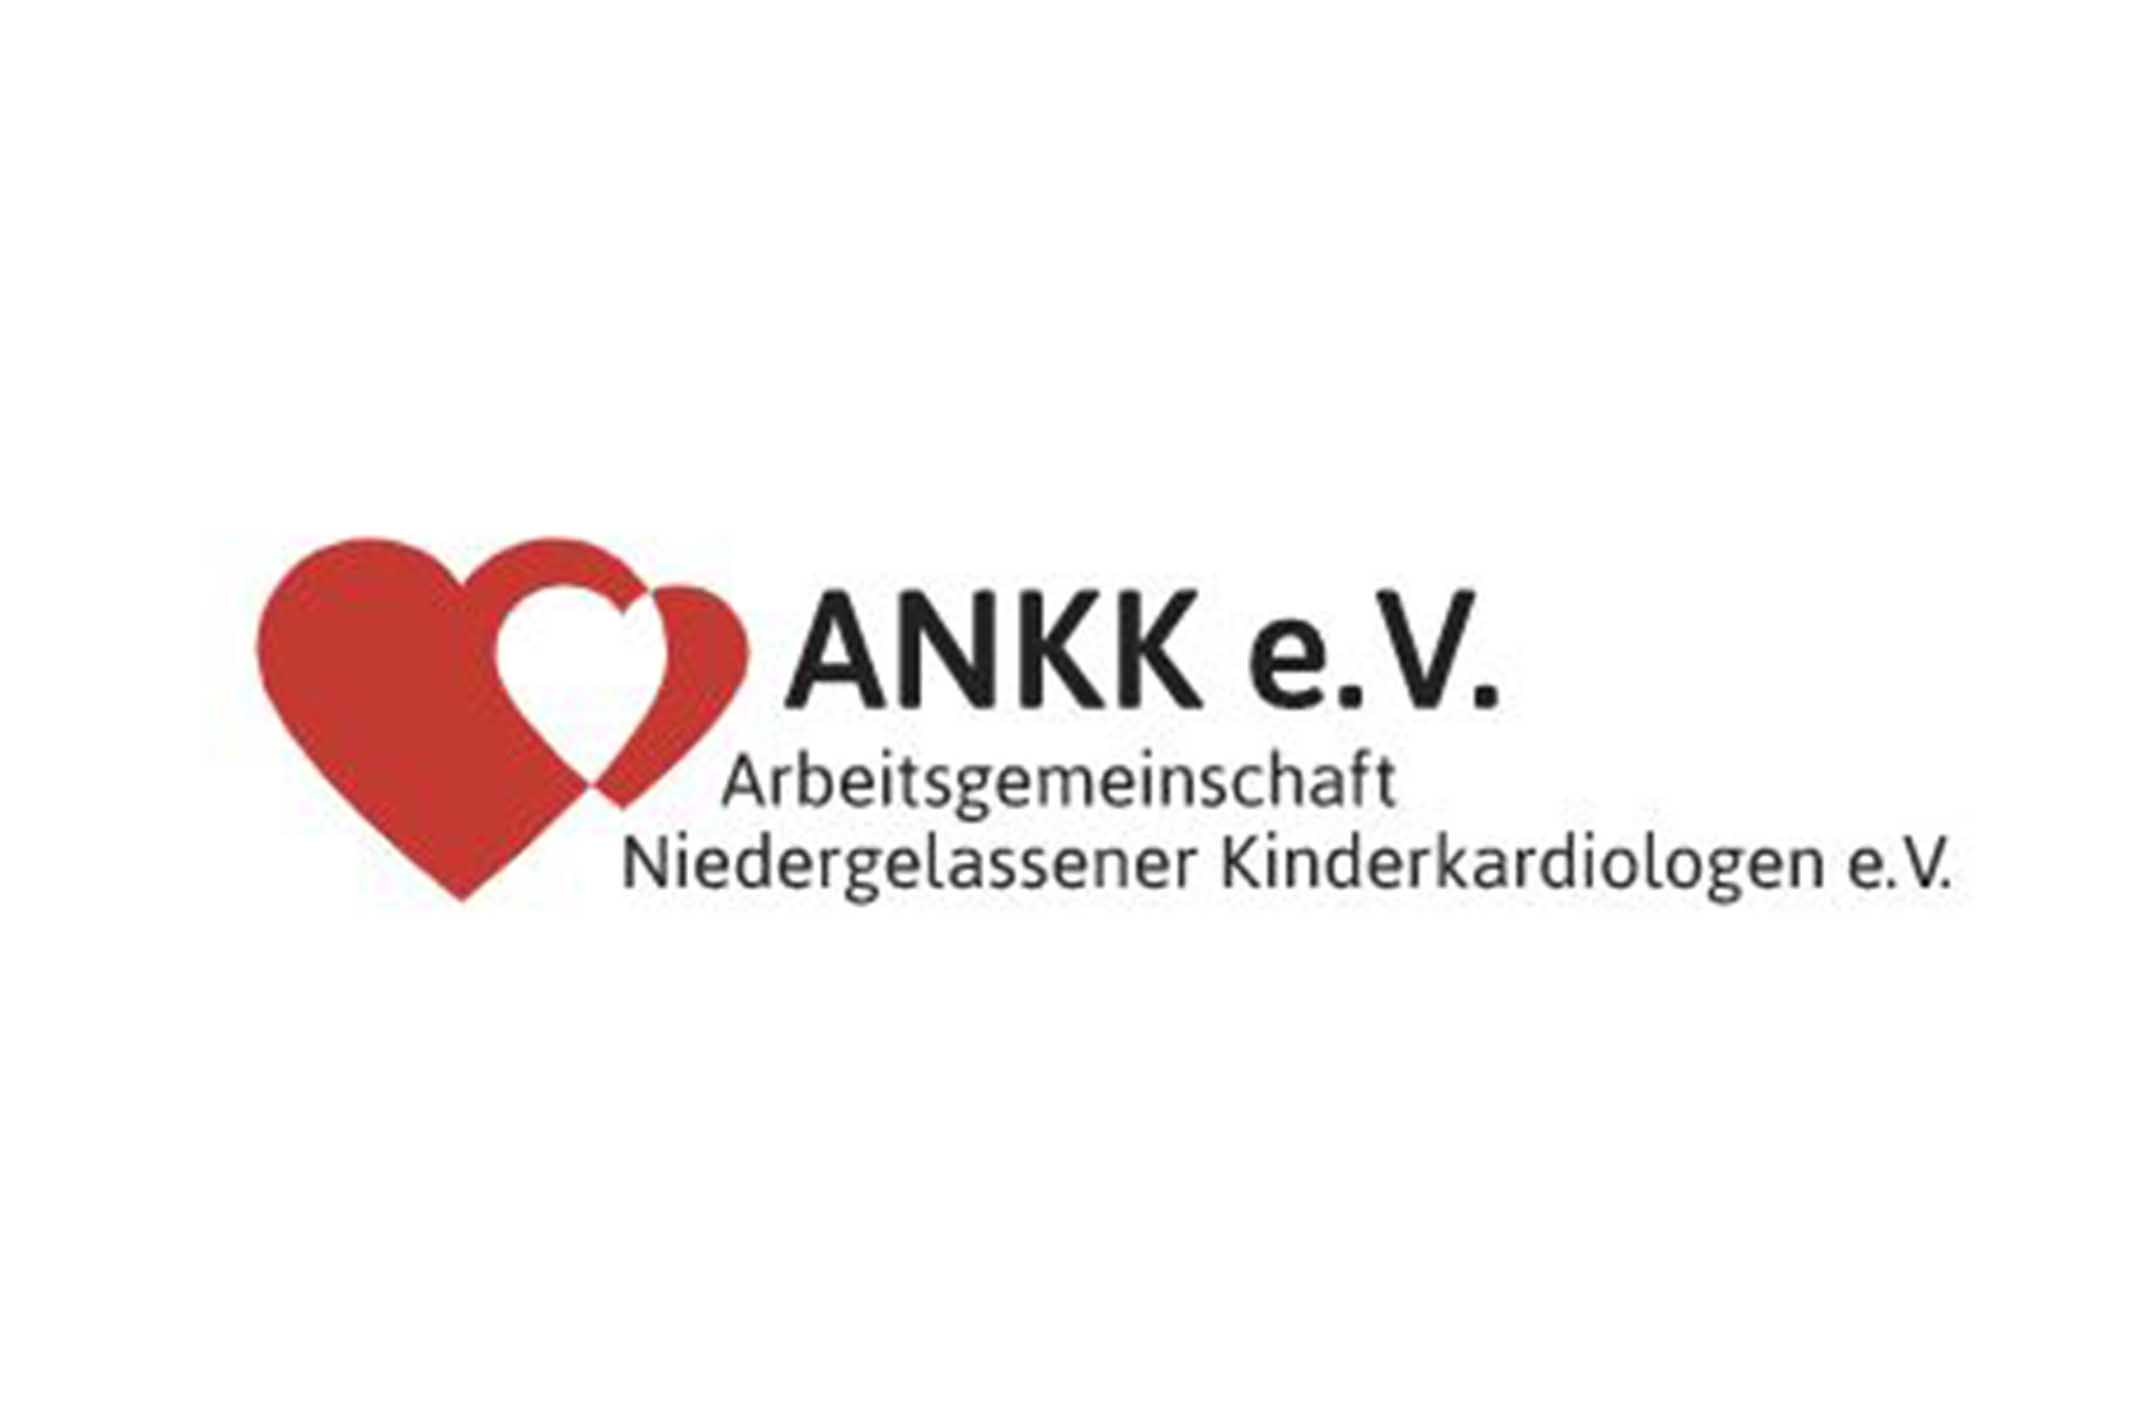 Arbeitsgemeinschaft Niedergelassener Kinderkardiologen (ANKK) e.V.